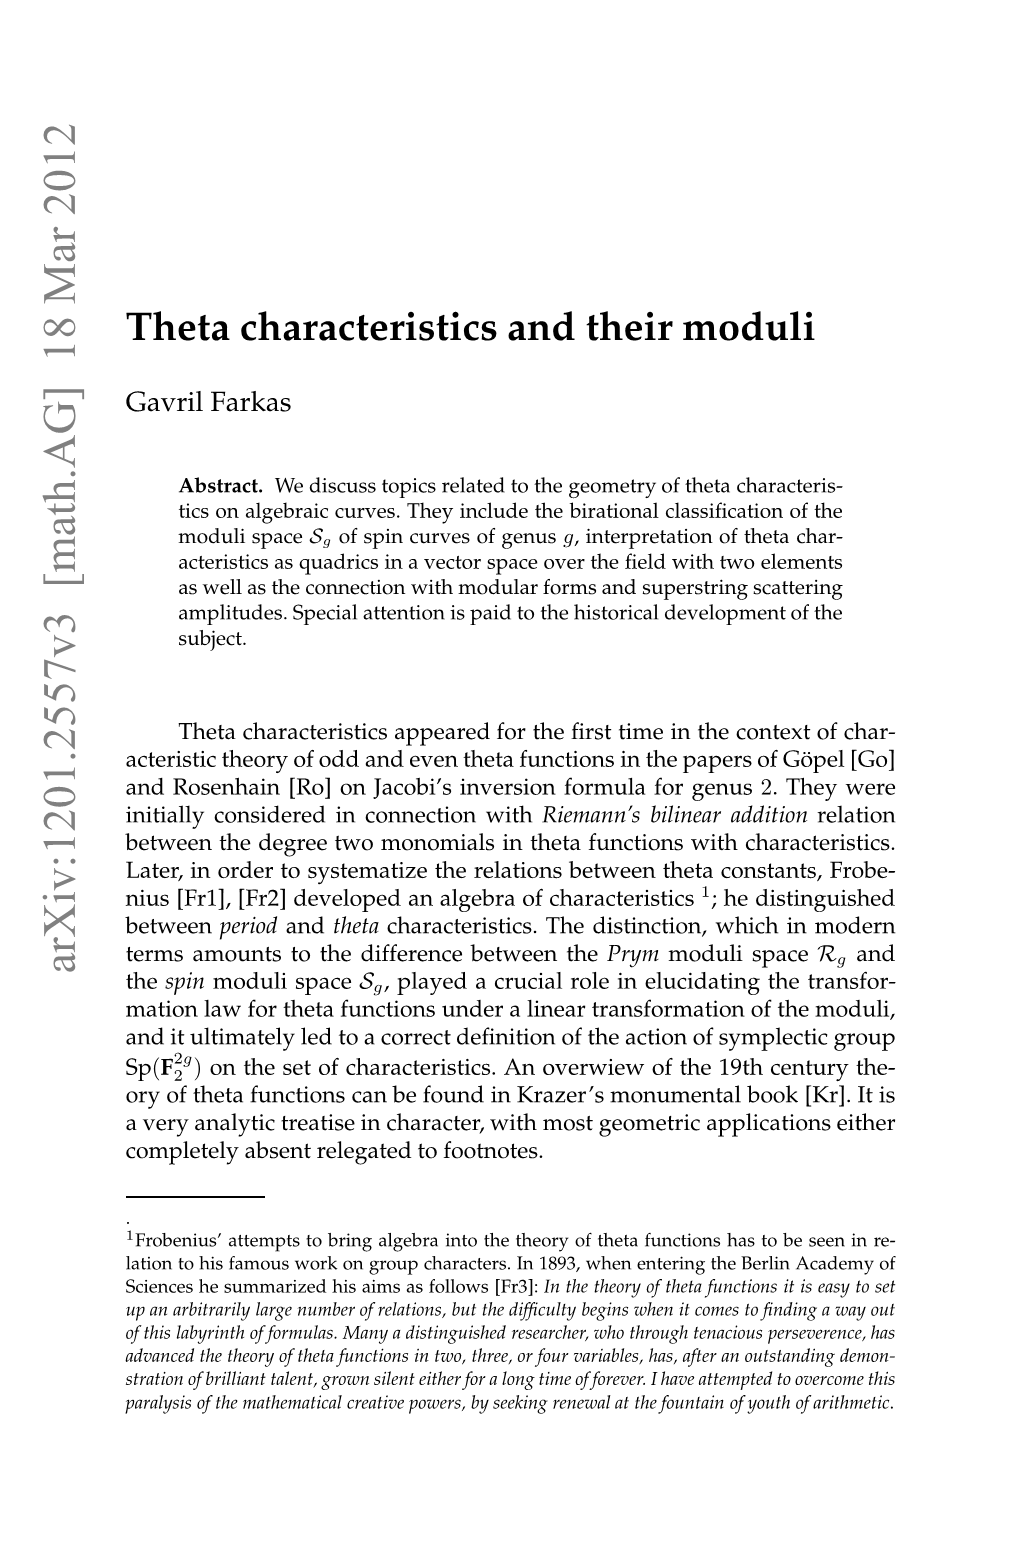 Theta Characteristics and Their Moduli 3